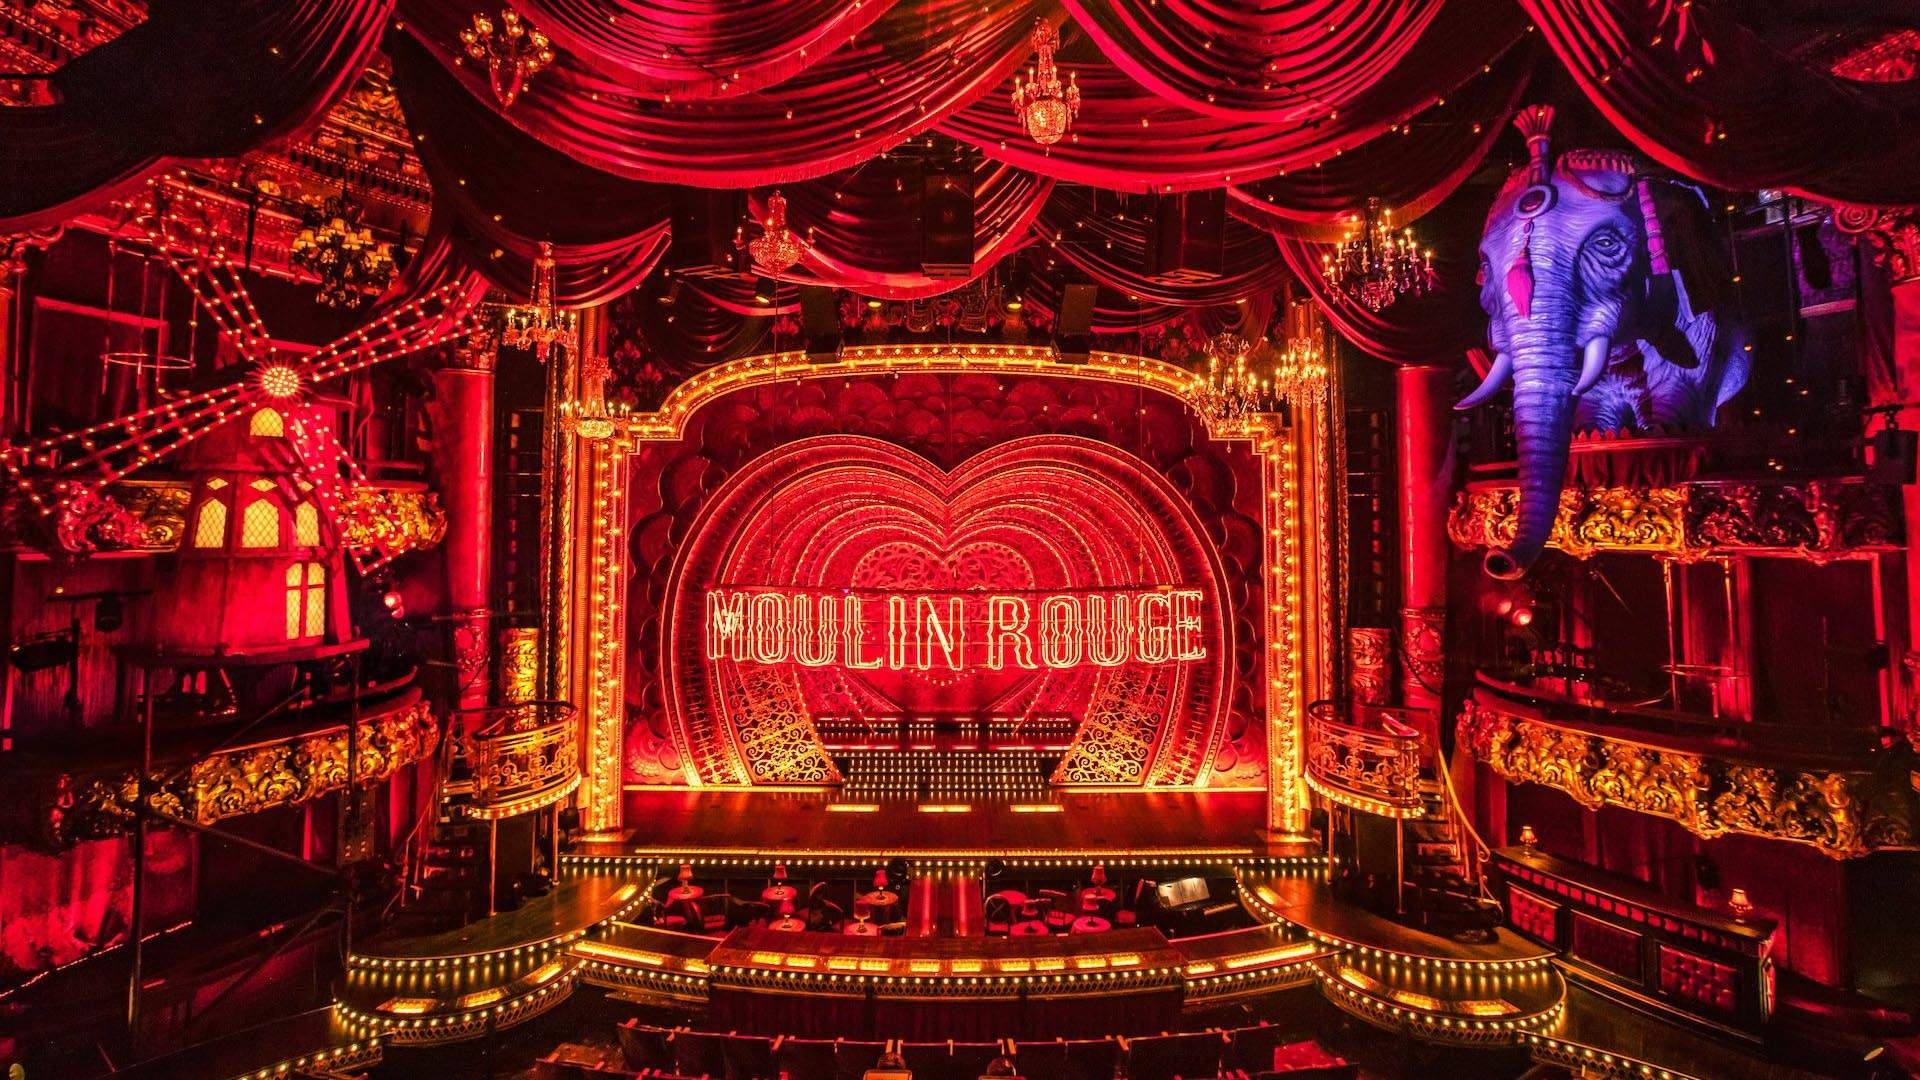 HD wallpaper, Desktop 1080P Moulin Rouge Movie Background, Bohemian Revolution, 1920X1080 Full Hd Desktop, Spectacular Musical, Baz Luhrmann, Moulin Rouge